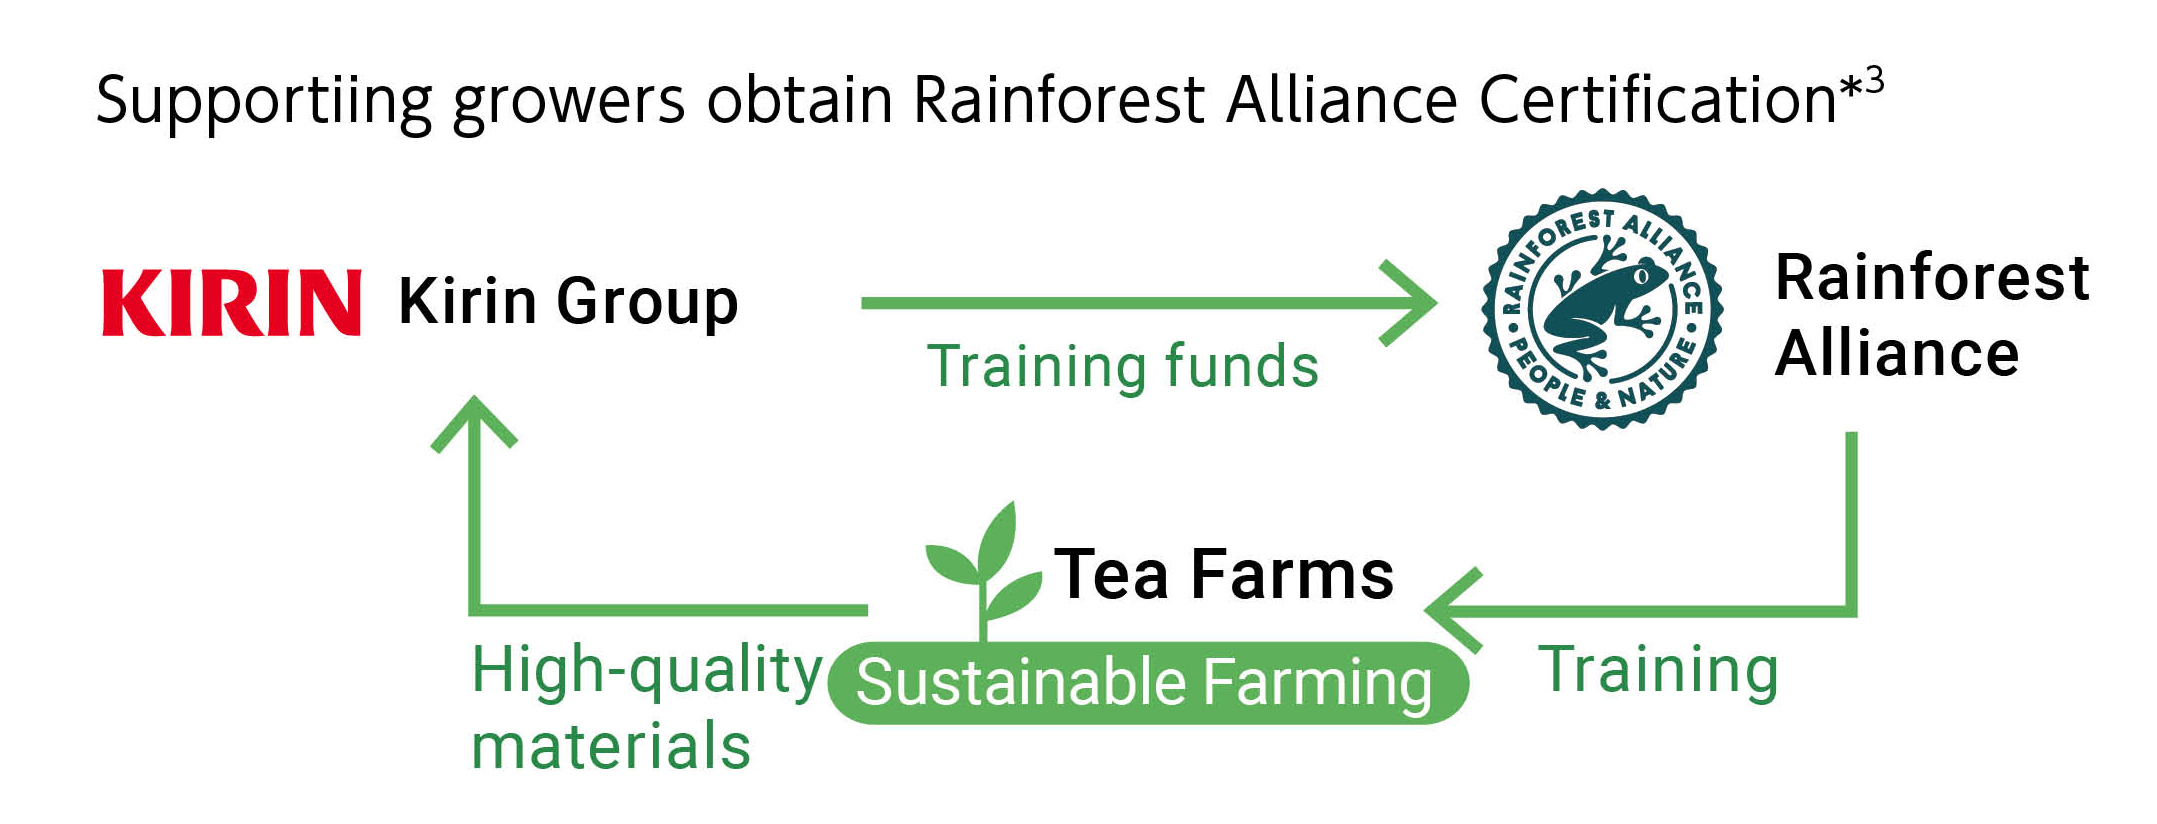 Supportiing growers obtain Rainforest Alliance Certification